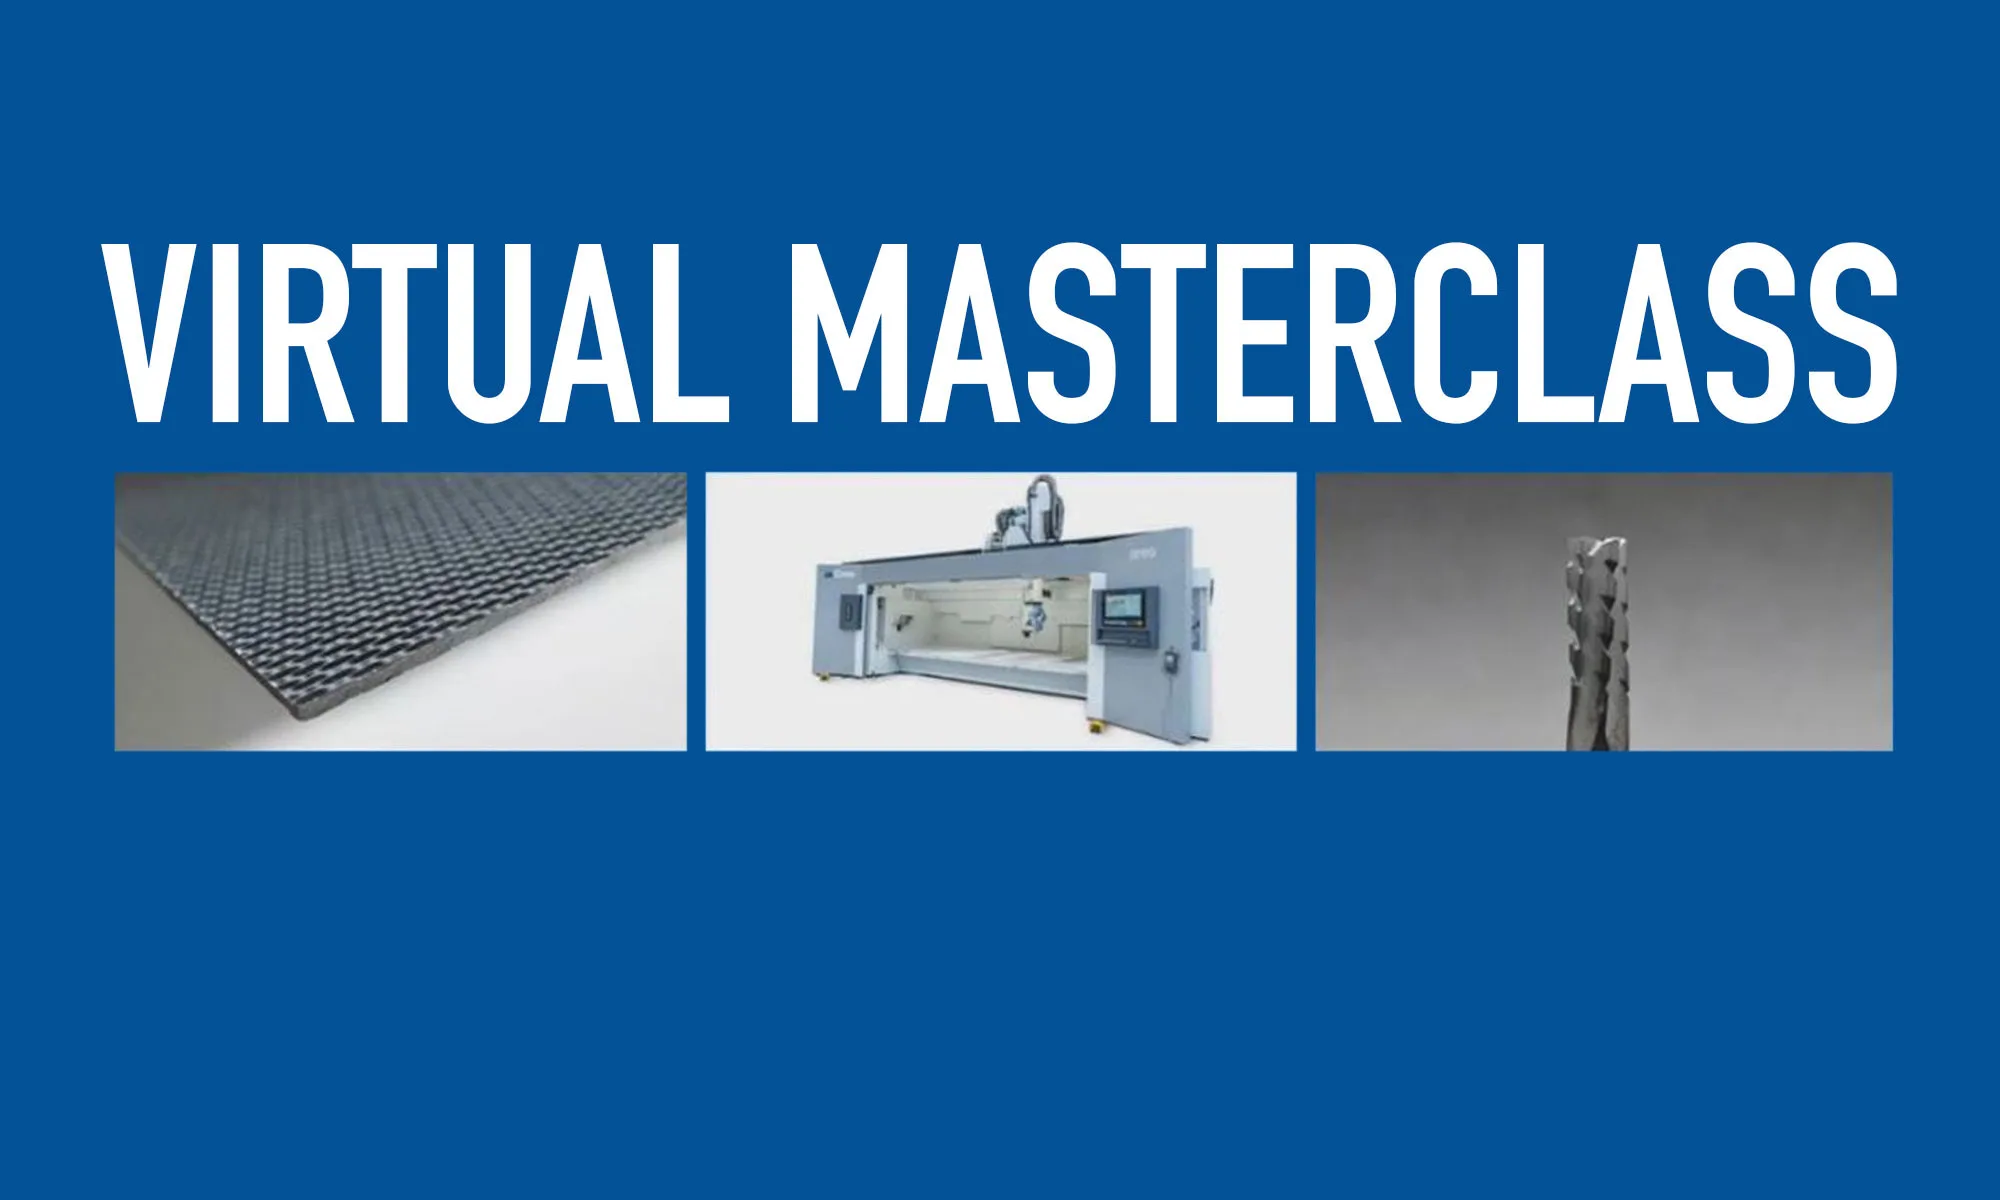 Successful Virtual Masterclass on carbon fiber reinforced thermoplastics